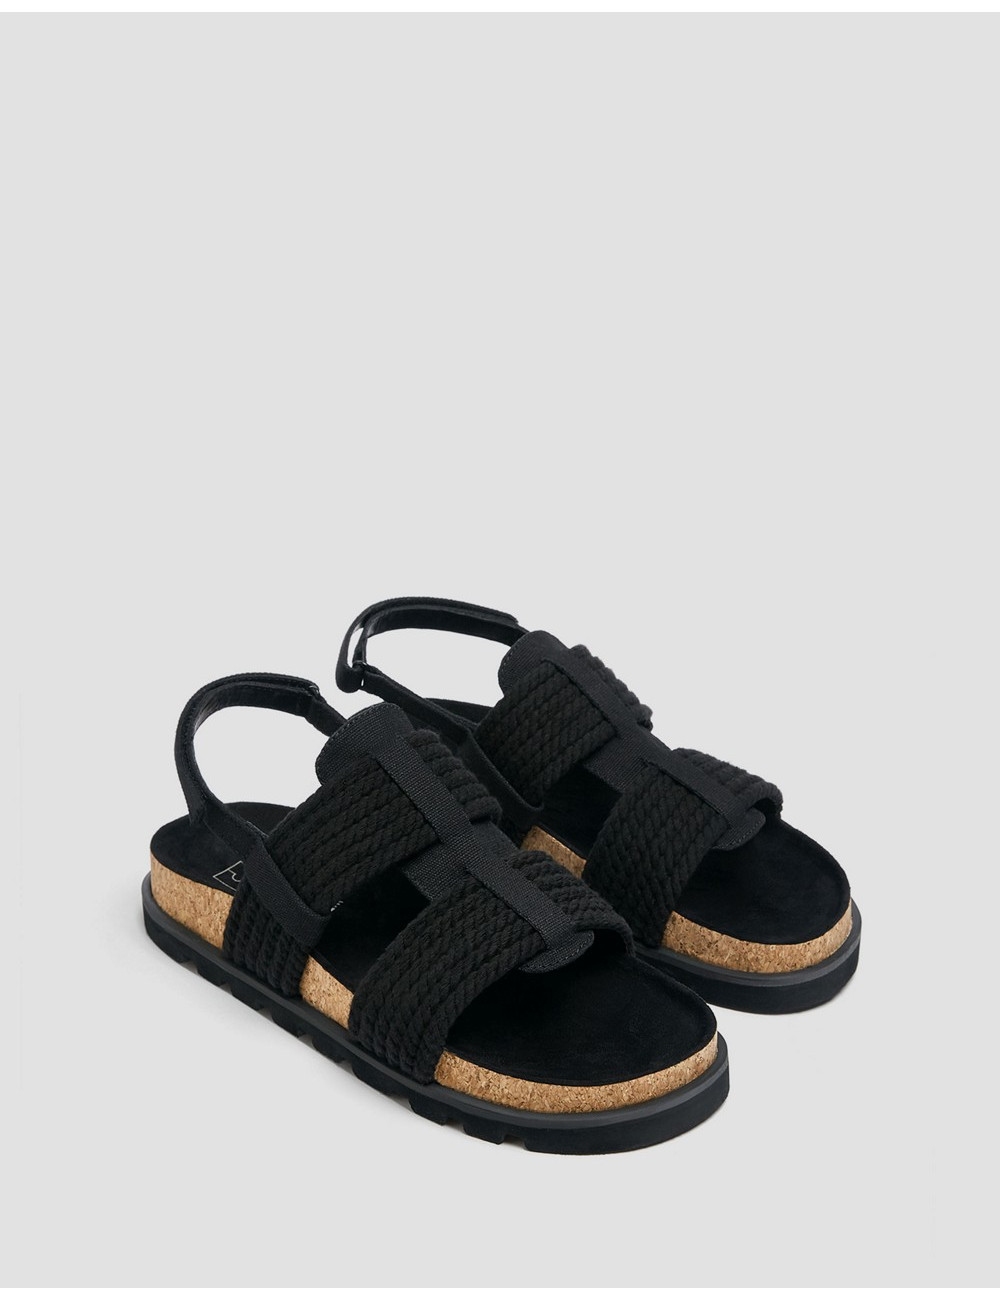 Pull&Bear rope sandal in black